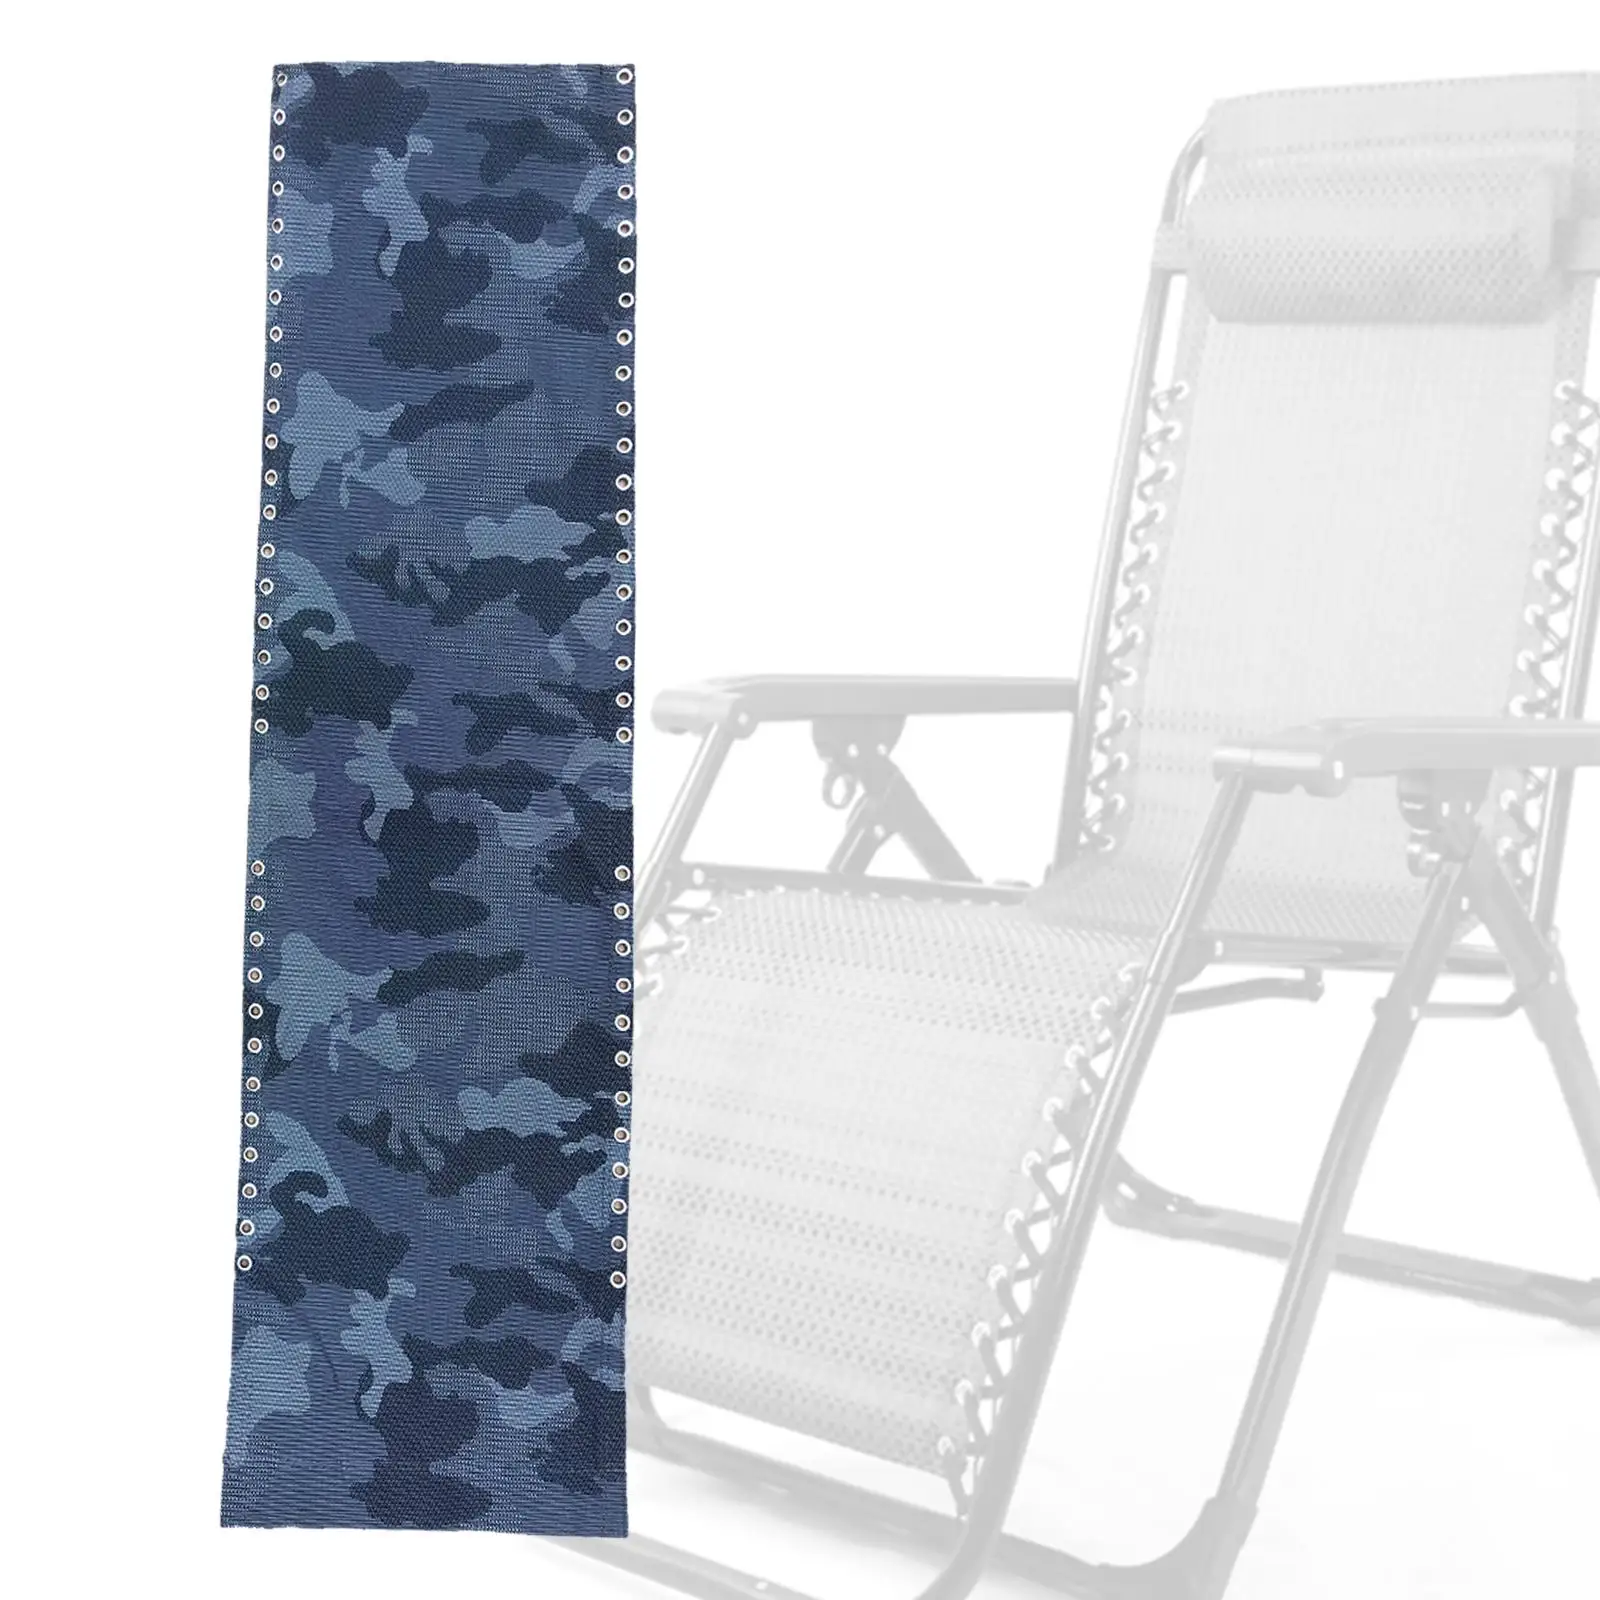 Recliner Chair Cloth Chair Accessories Lounger Replacement Cloth Recliner Lounge Chair Cloth for Folding Chair Deck Chairs